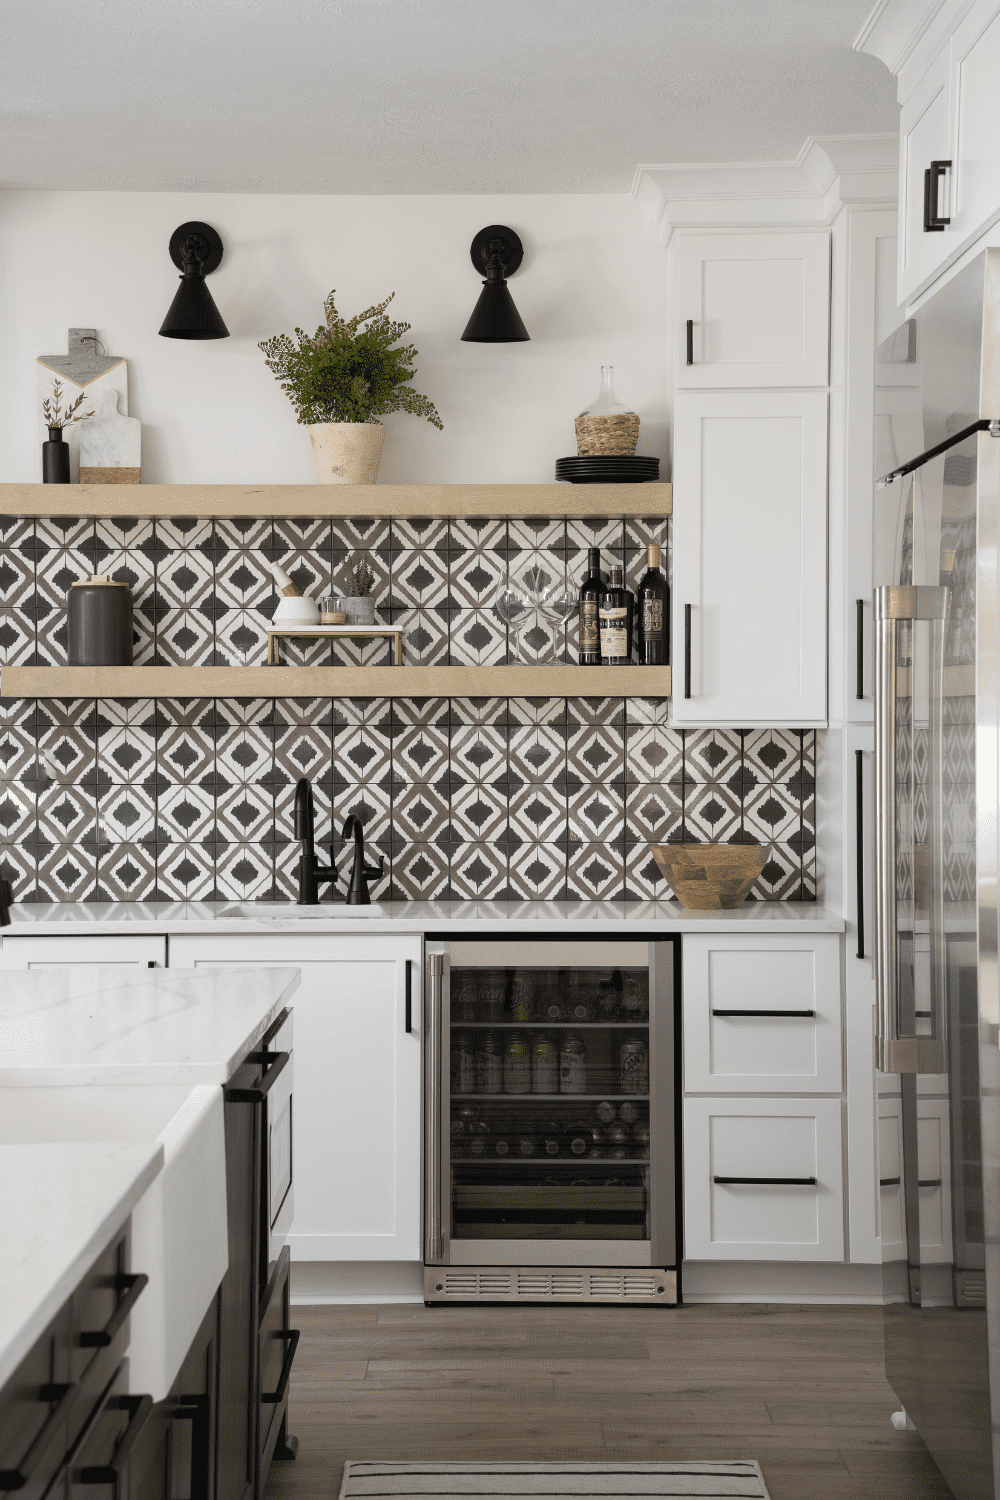 Nicholas Design Build | A black and white kitchen with a tile backsplash.